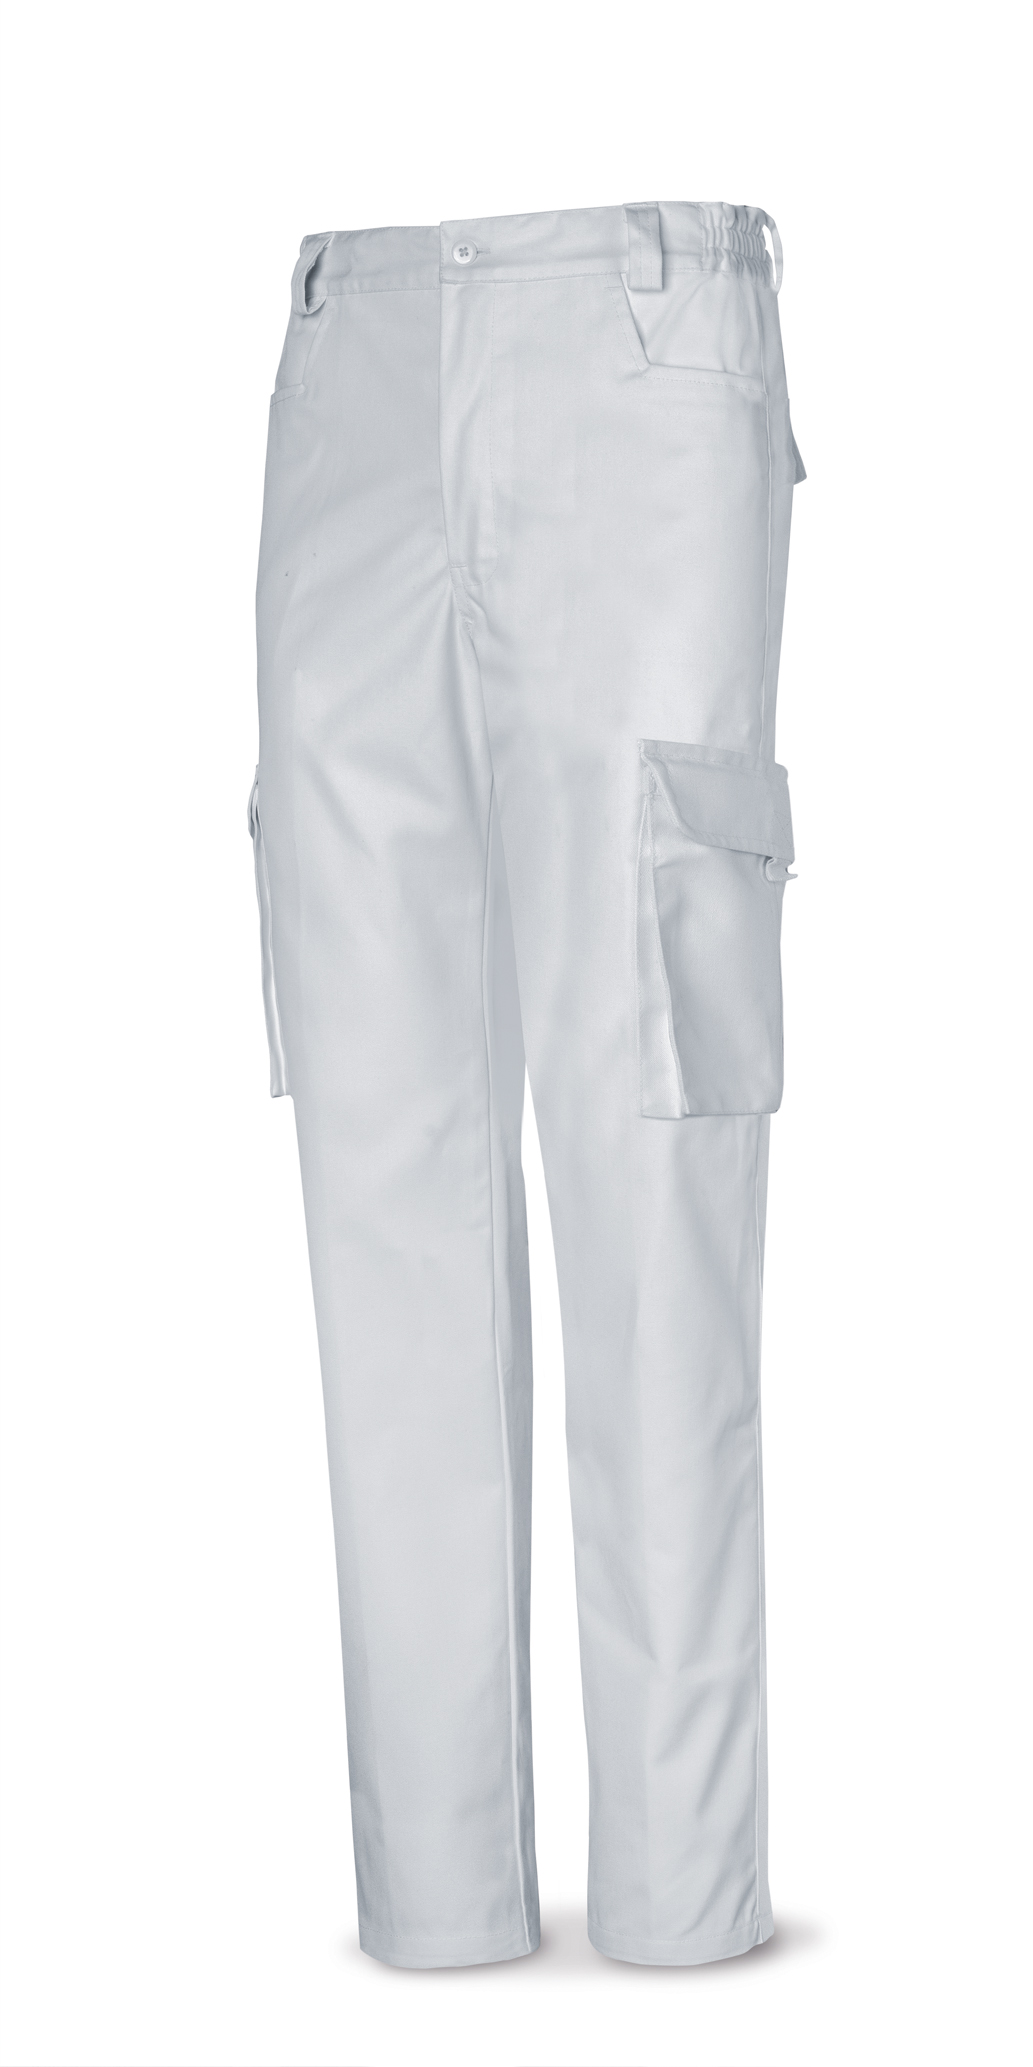 488-PB Top Workwear Top Series Tergal. White.